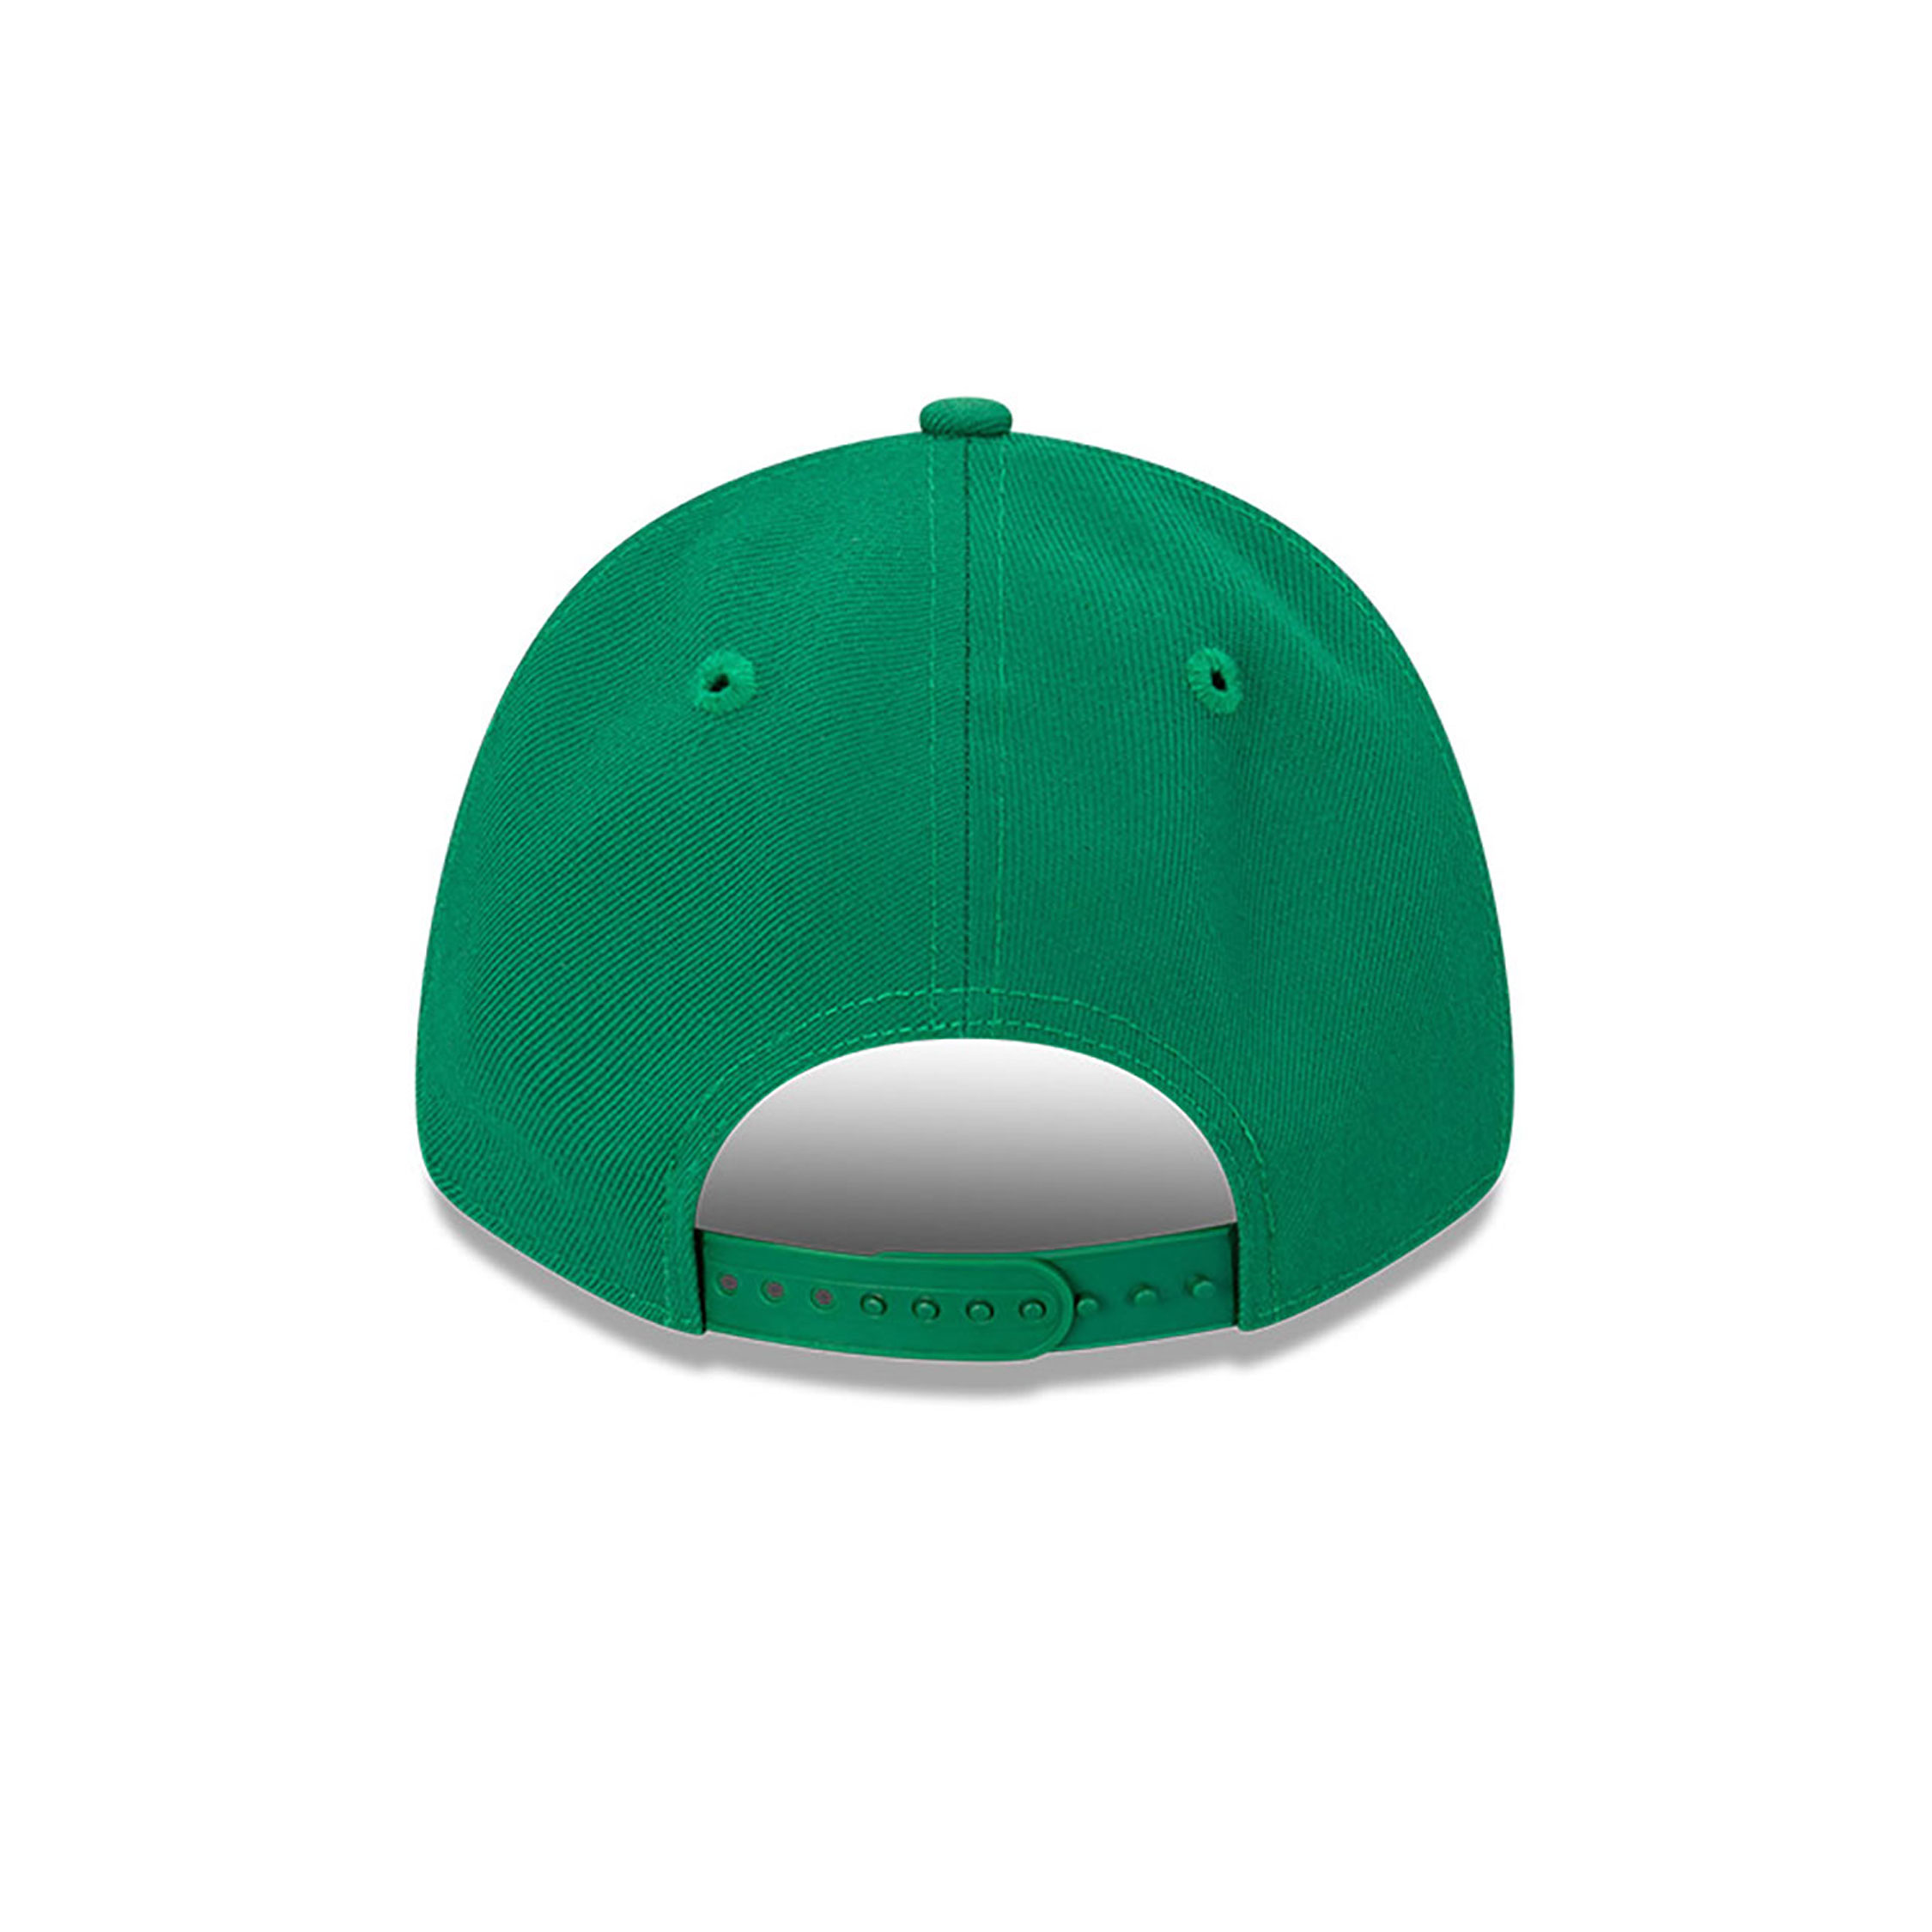 Boston Celtics Monochrome Green 9FORTY Adjustable Cap